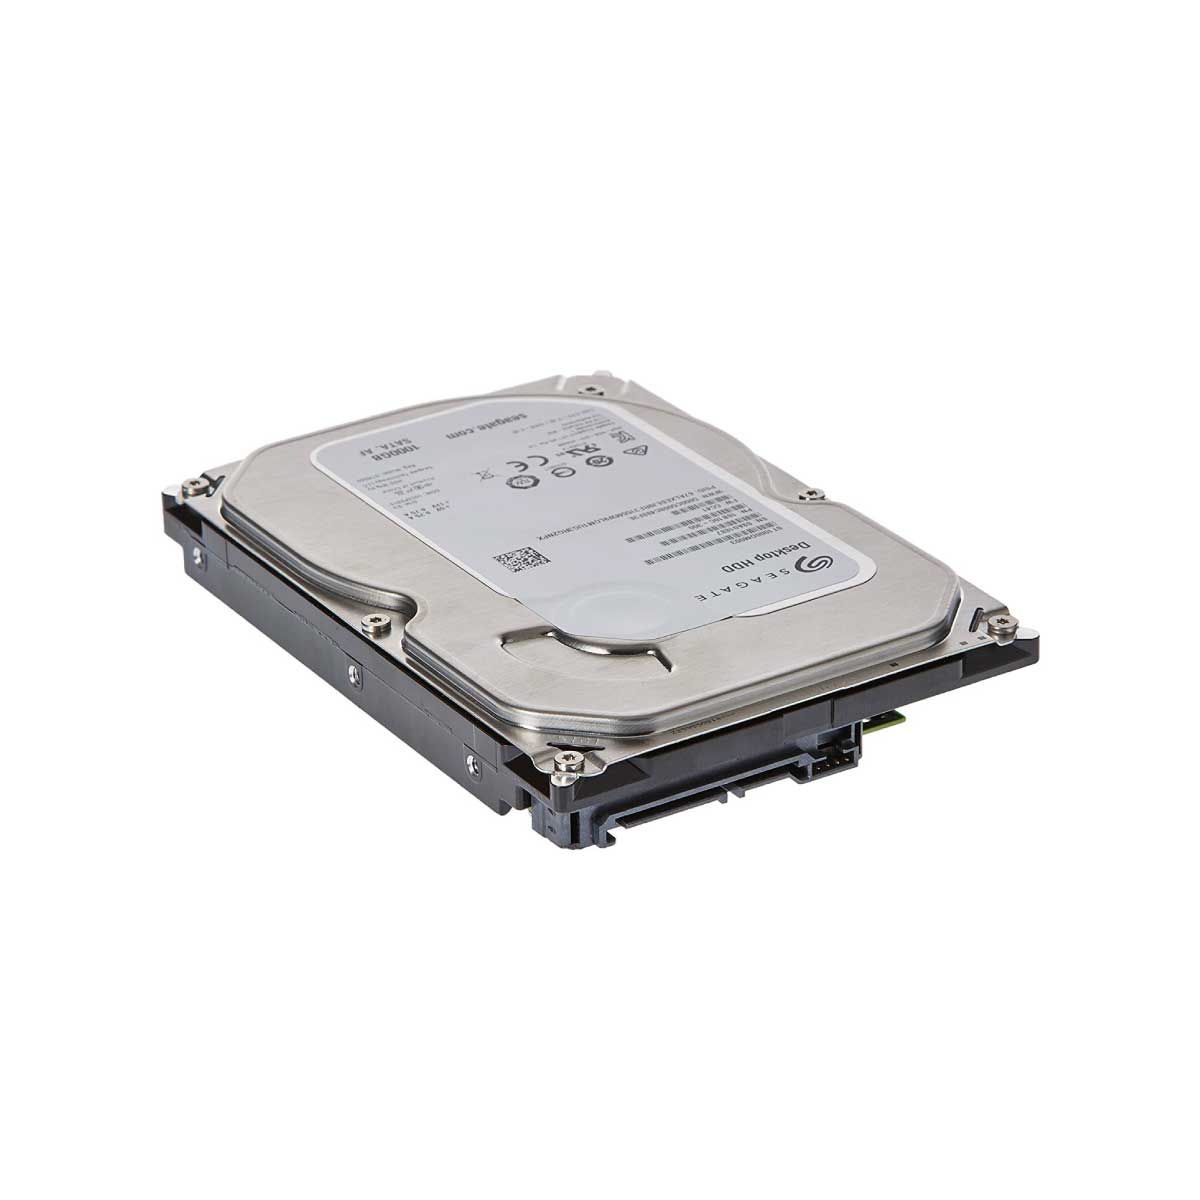 SEAGATE HDD (ฮาร์ดดิสก์) SATA-III 64MB 1TB (ST1000DM003) For PC